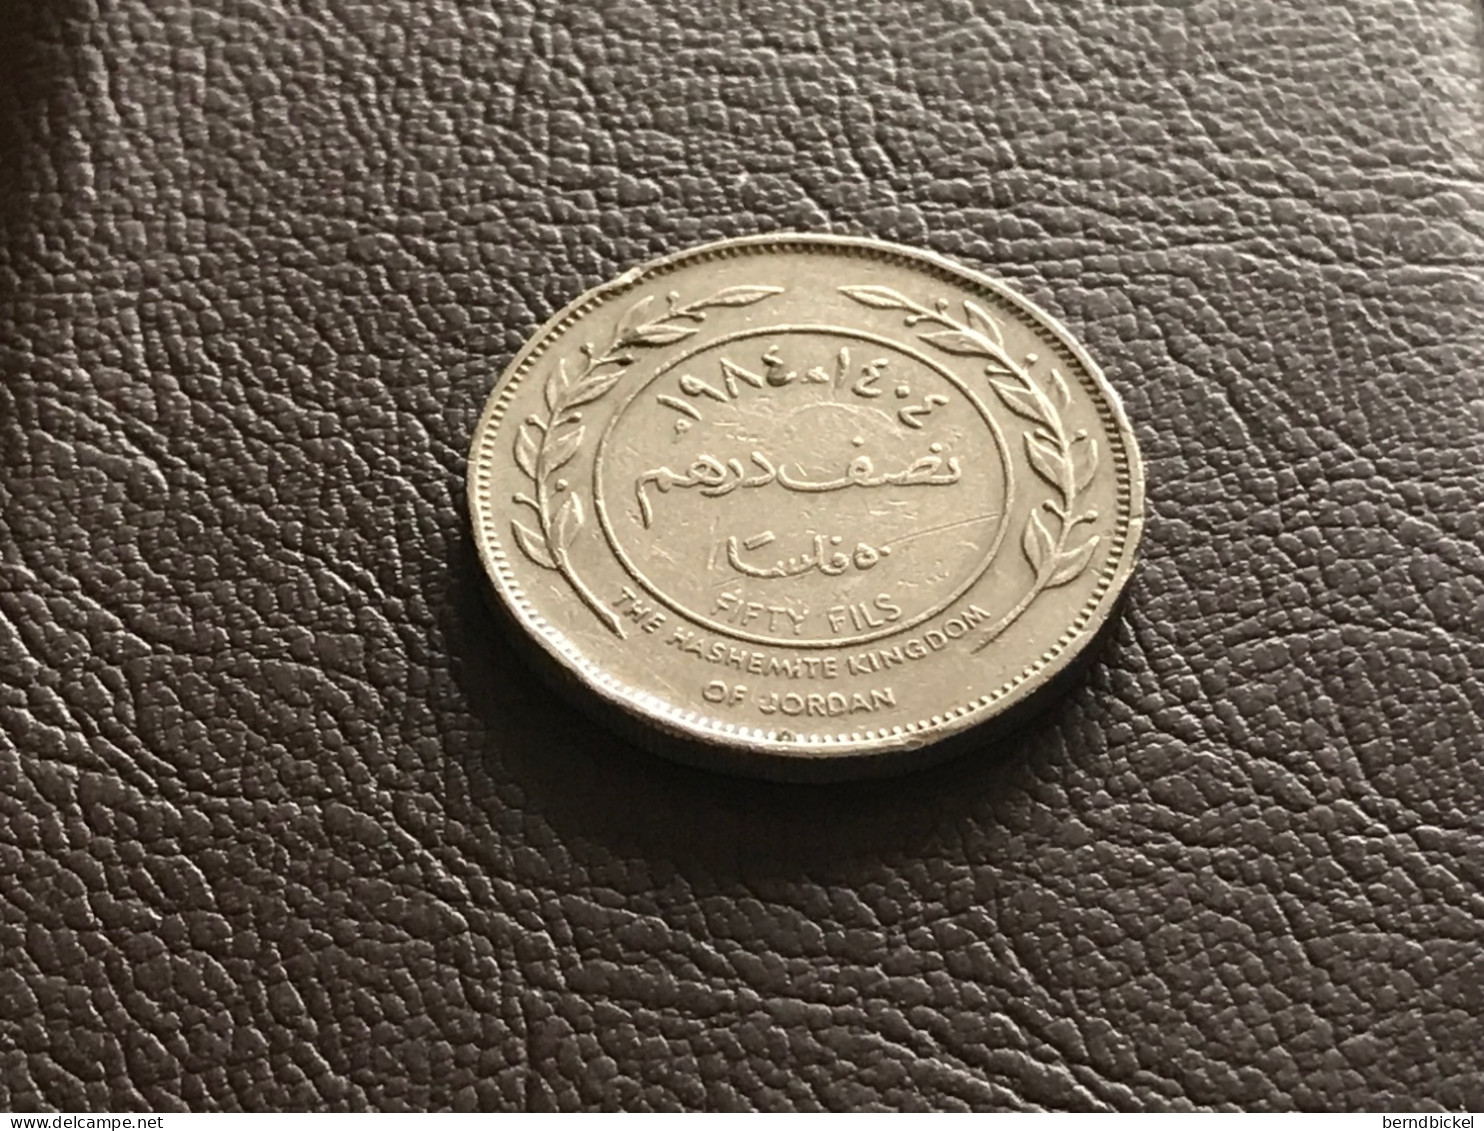 Münze Münzen Umlaufmünze Jordanien 50 Fils 1984 - Jordanien